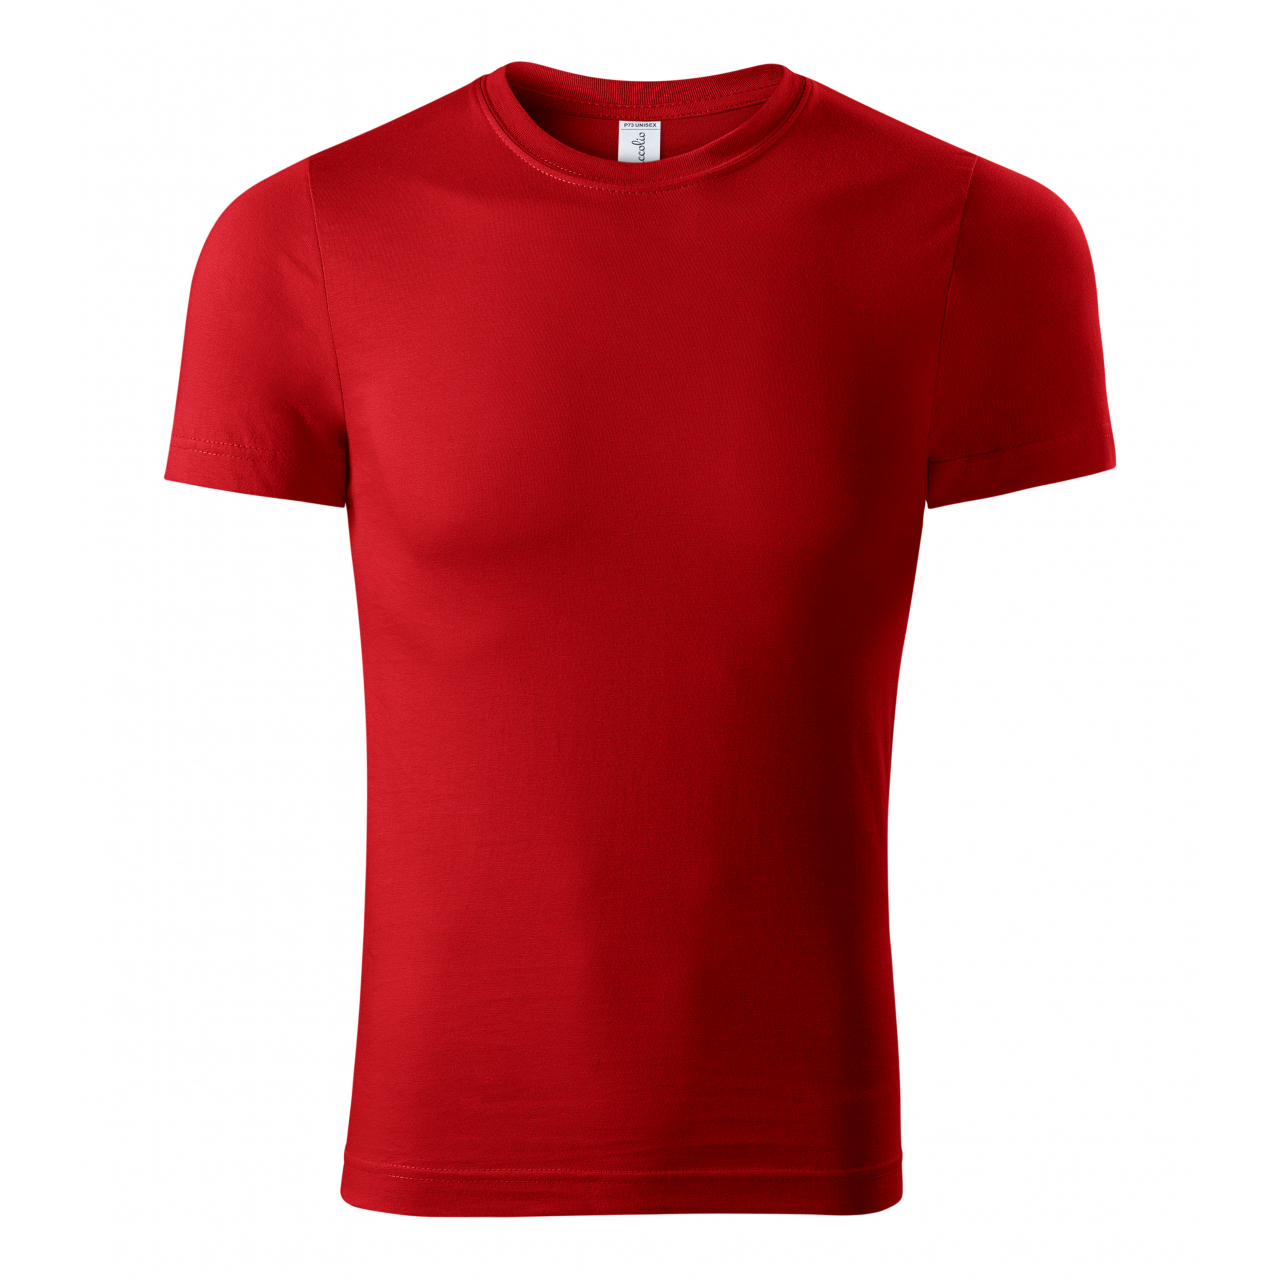 Tričko unisex Piccolio Paint - červené, XL